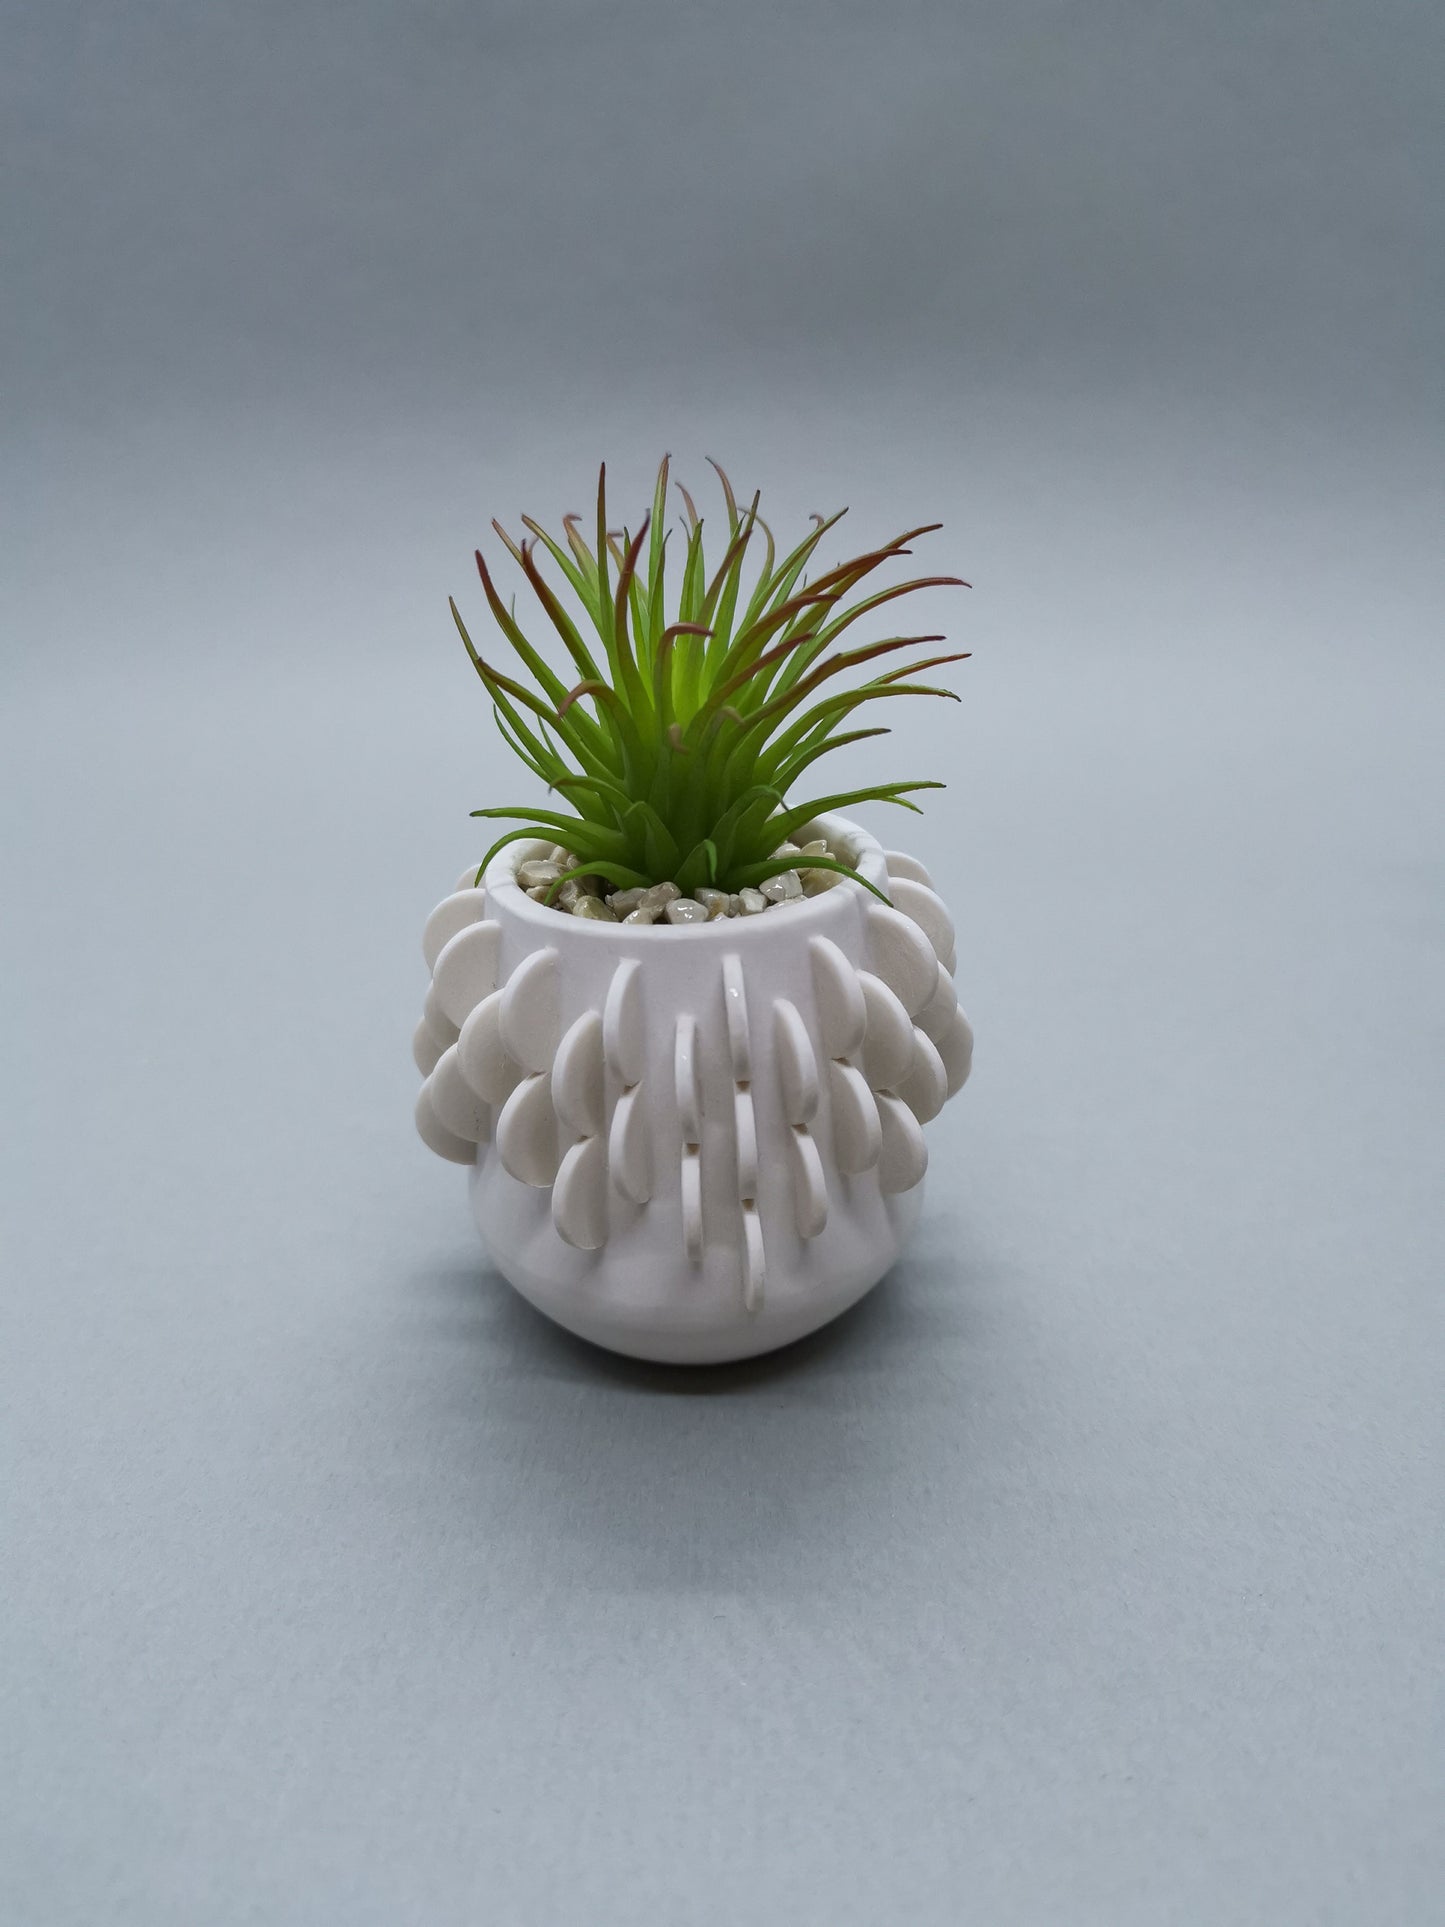 Artificial Succulent in a Pot